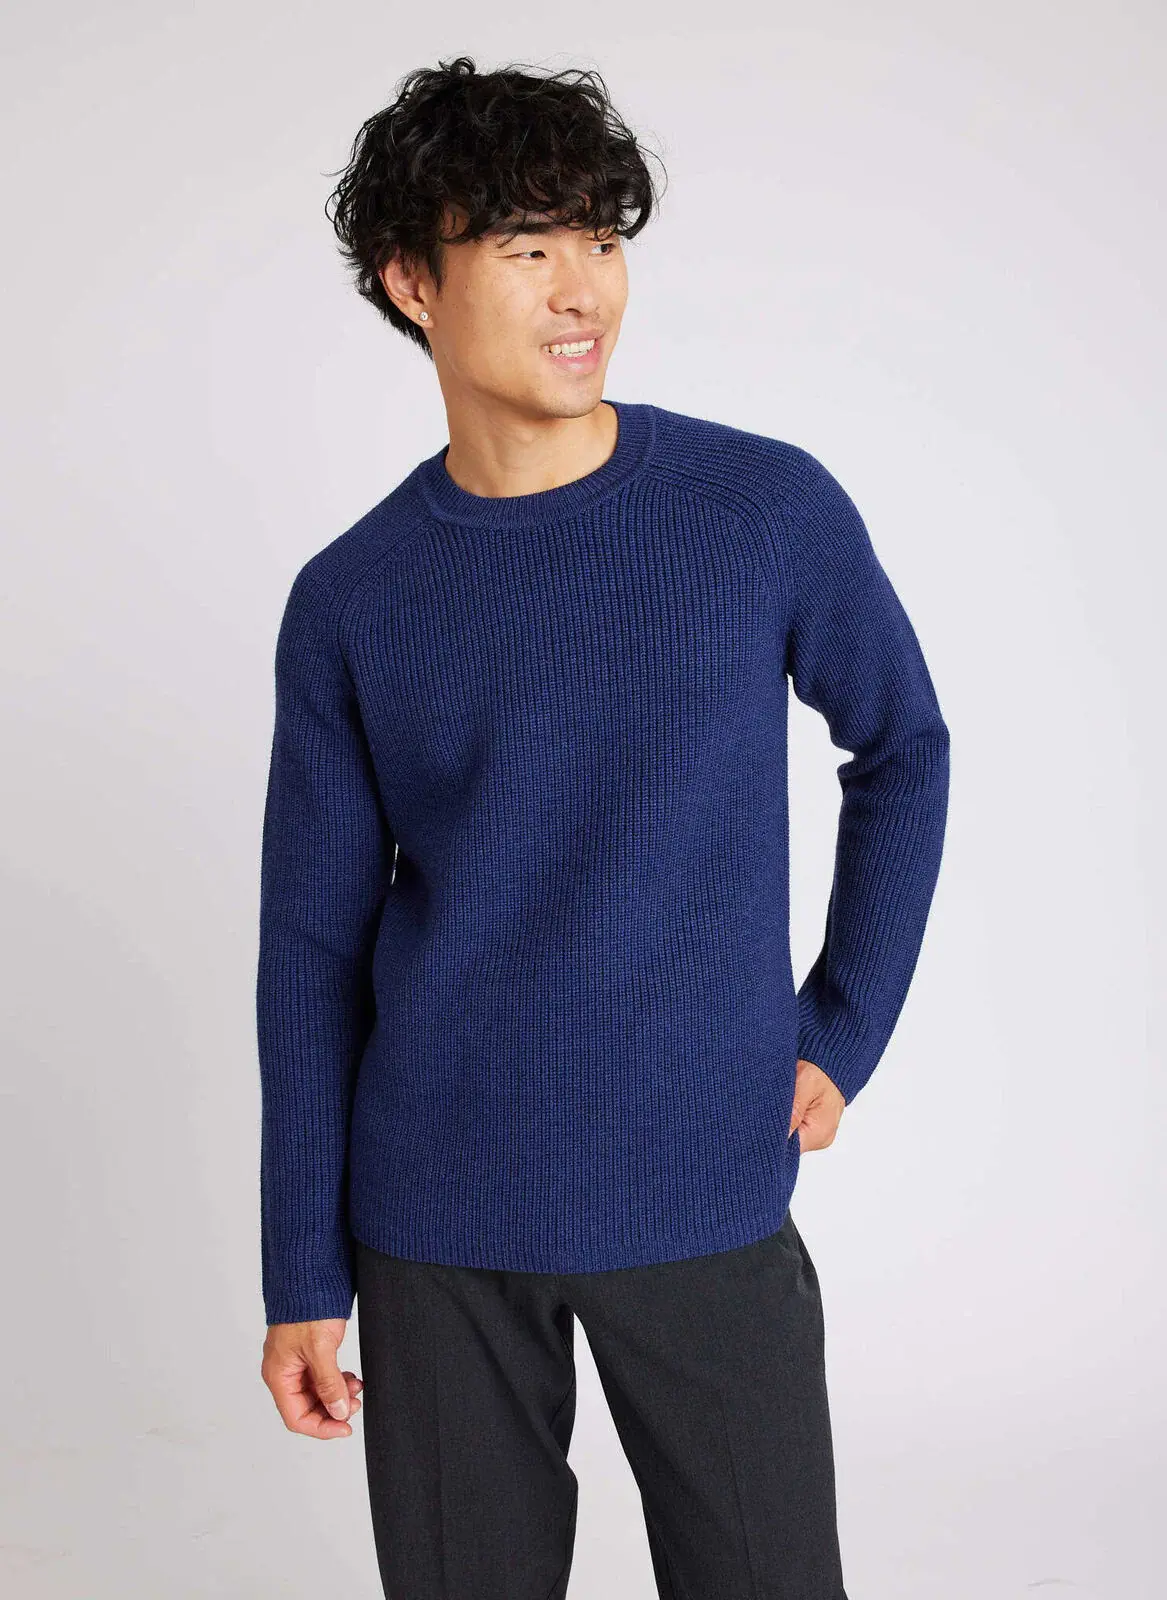 Kit And Ace Mountain Merino Wool Sweater. 1